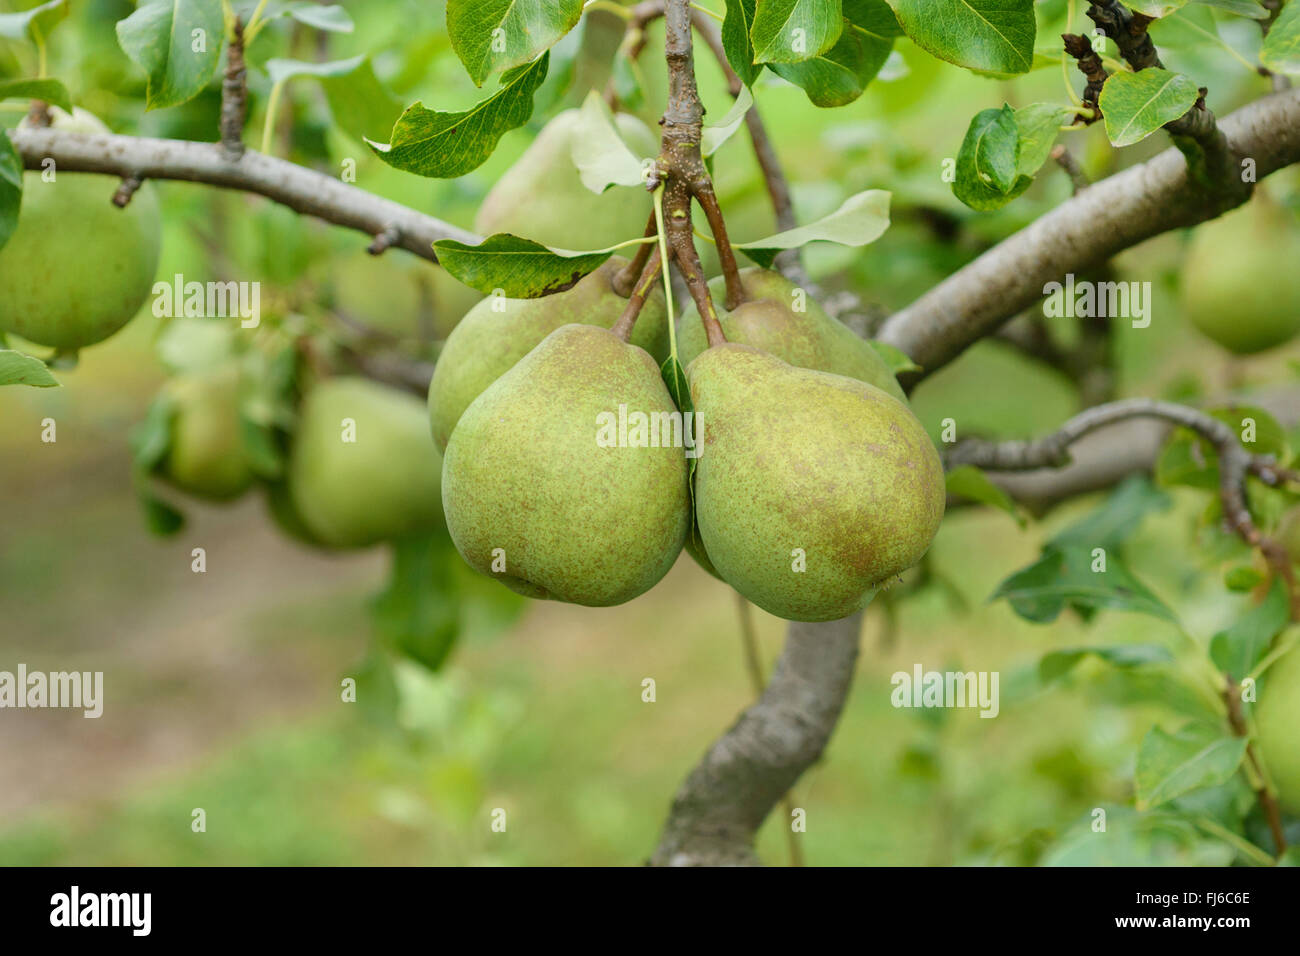 Common pear (Pyrus communis 'Jeanne d'Arc', Pyrus communis Jeanne d'Arc), pears on a tree, cultivar Jeanne d'Arc, Germany Stock Photo